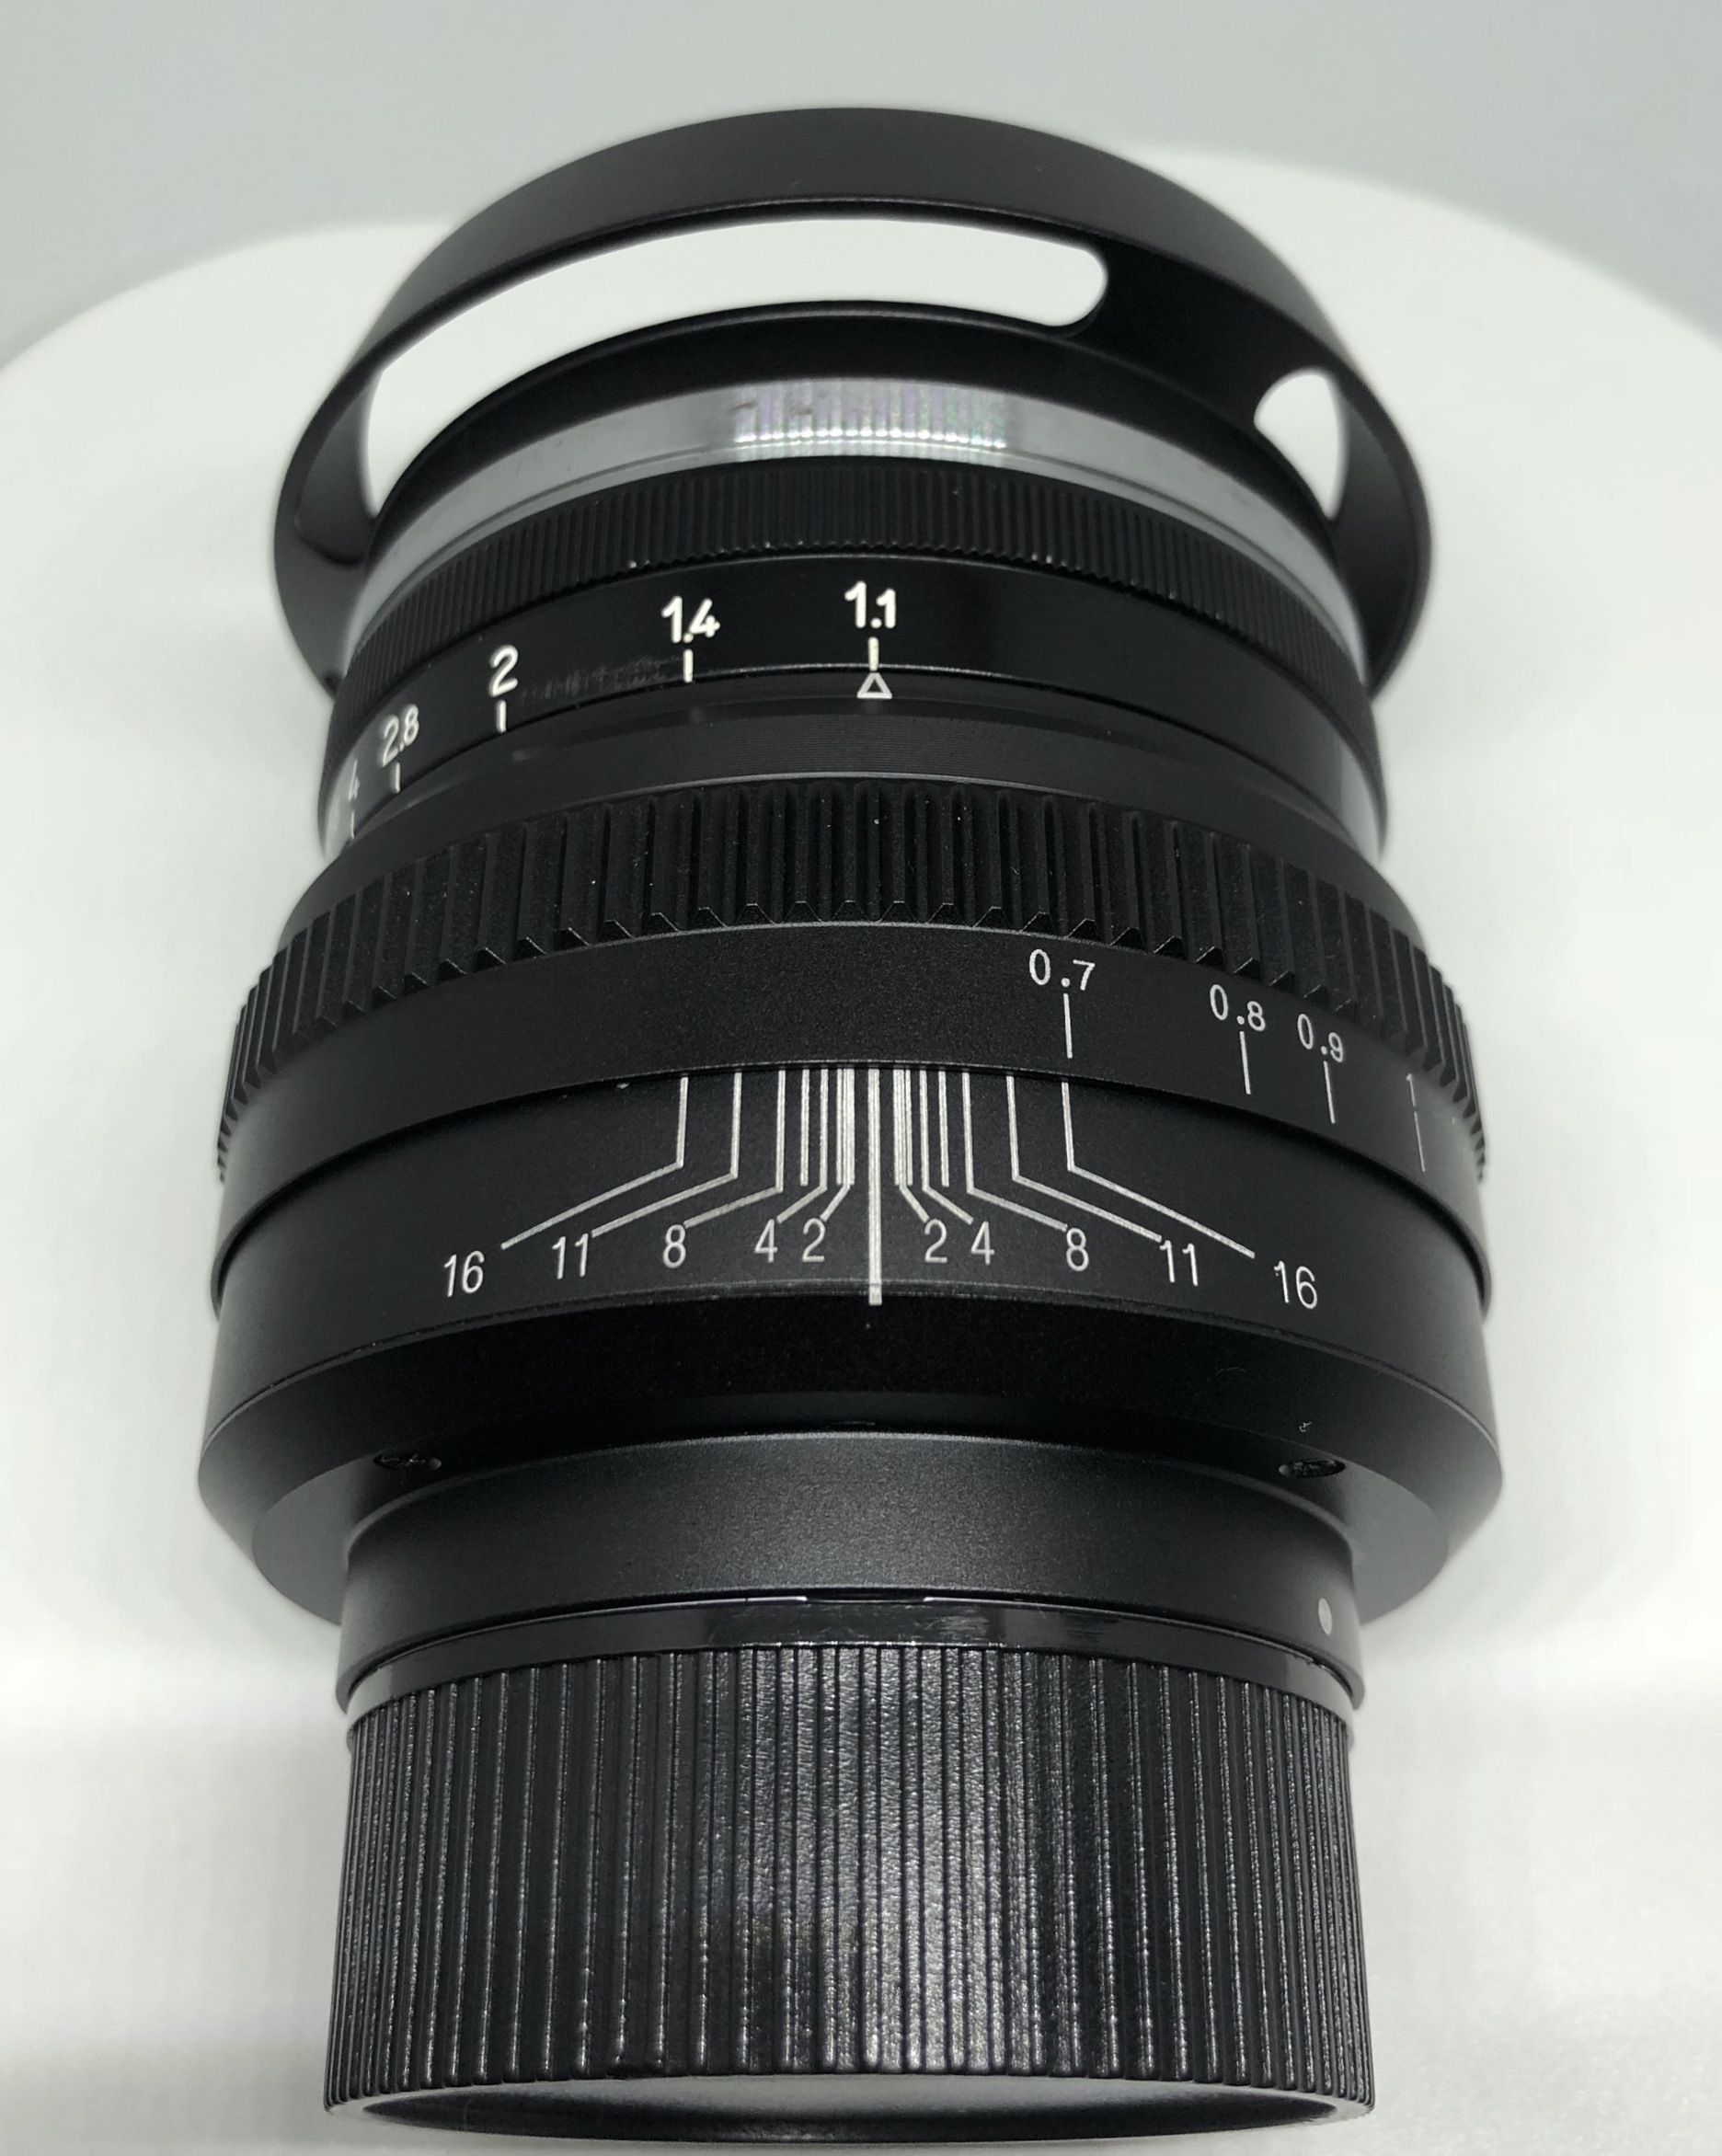 Nikkor 5cm f/1.1 | Nikon 50mm F1.1 LTM Lens — LEICA MOMENT REVIEW